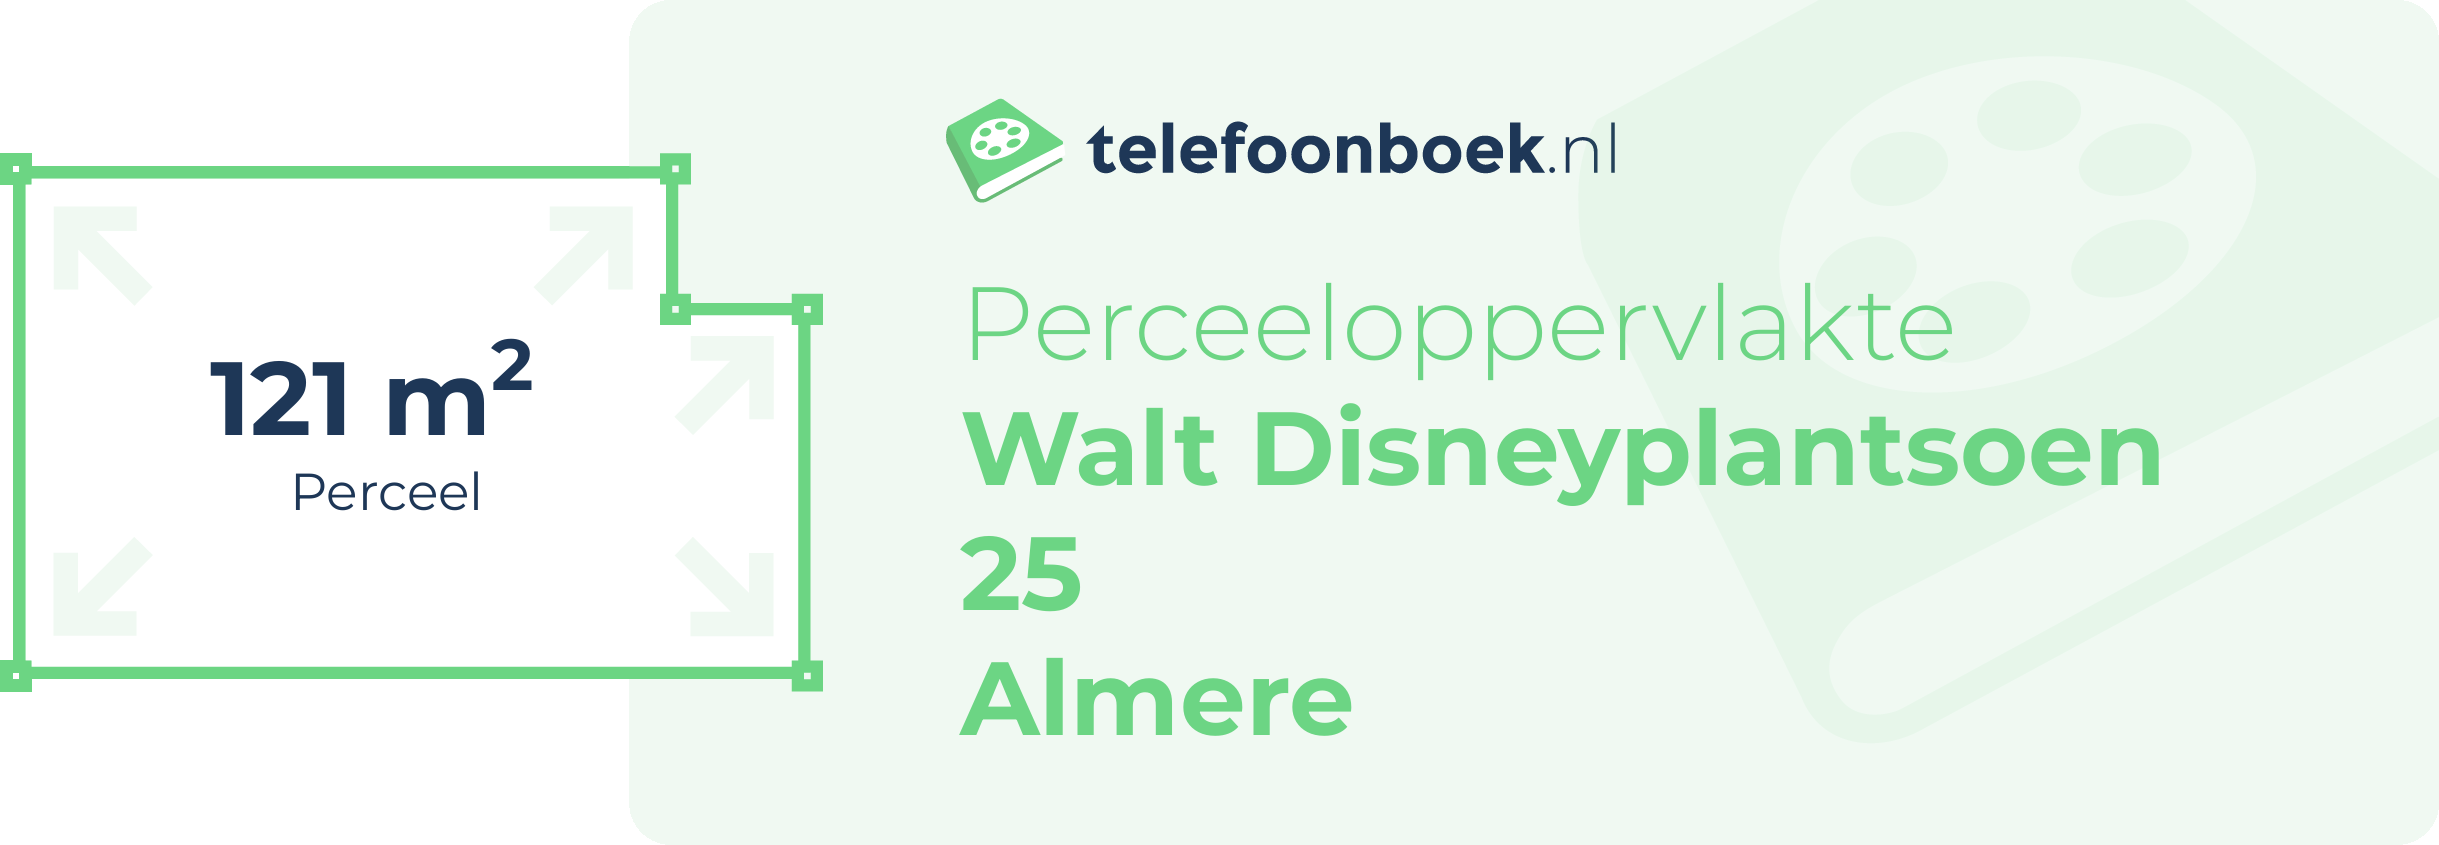 Perceeloppervlakte Walt Disneyplantsoen 25 Almere